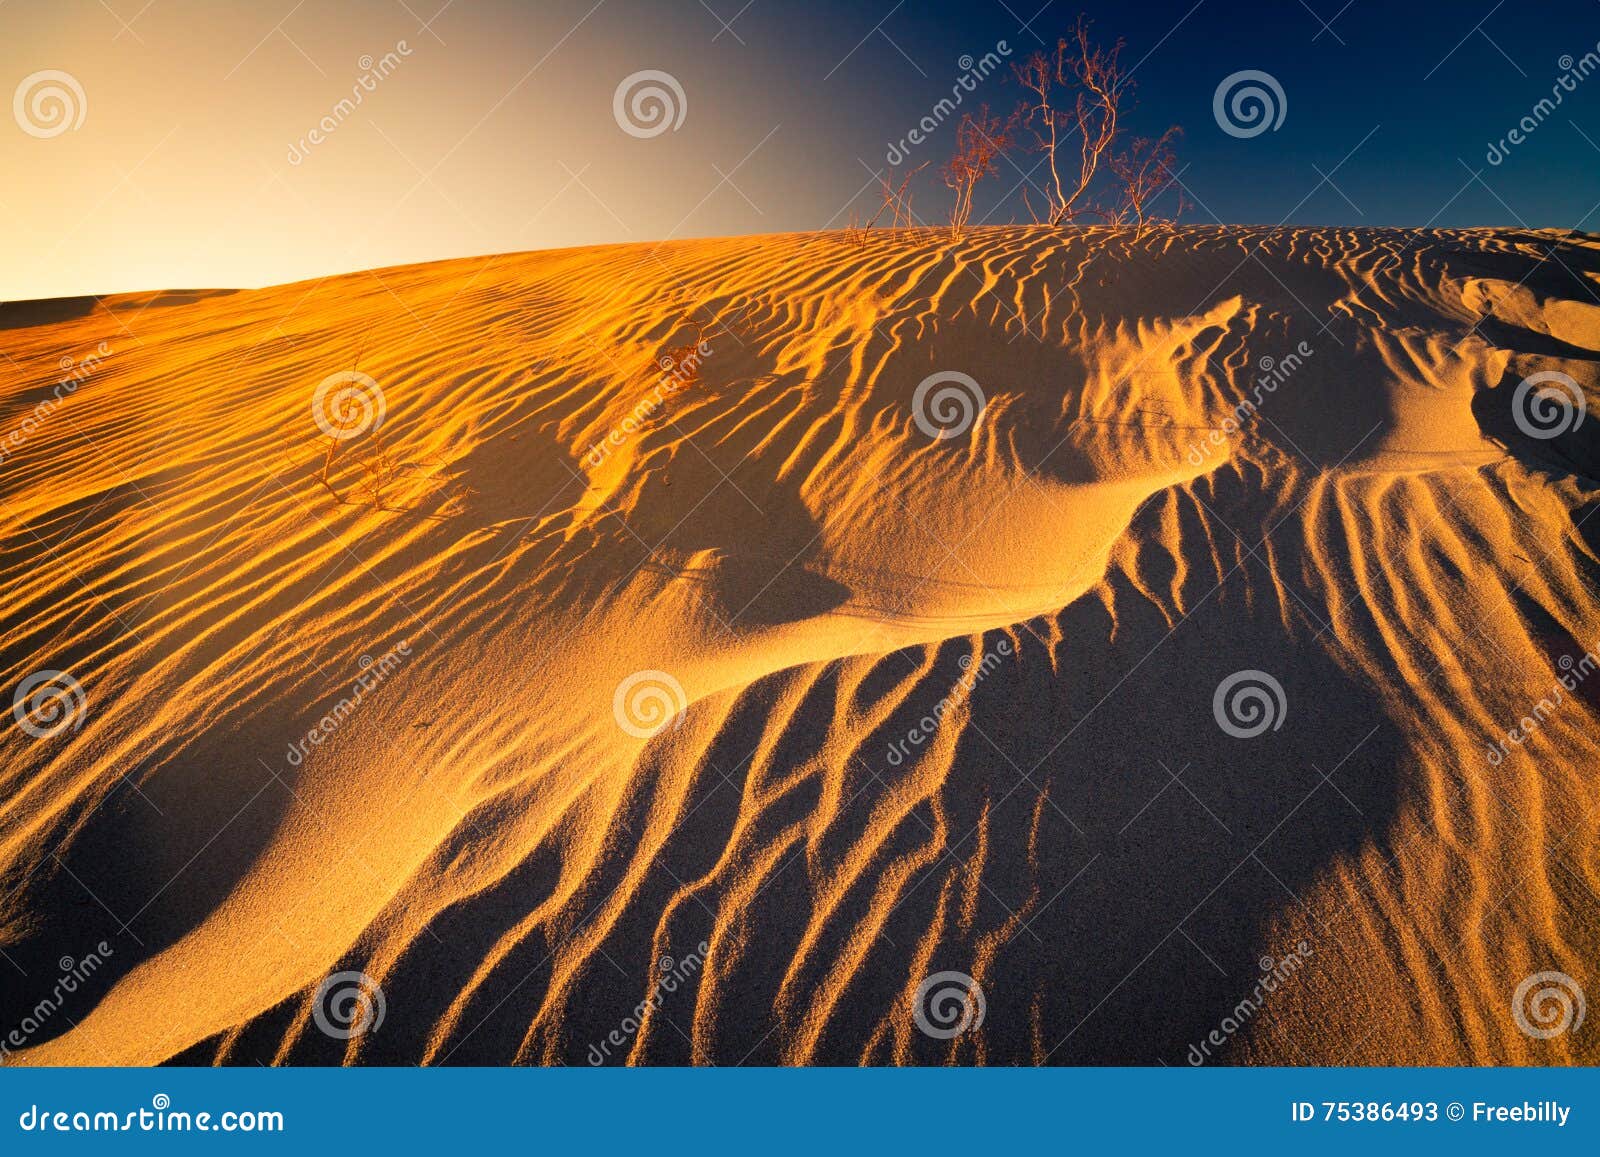 sand dune flux lines